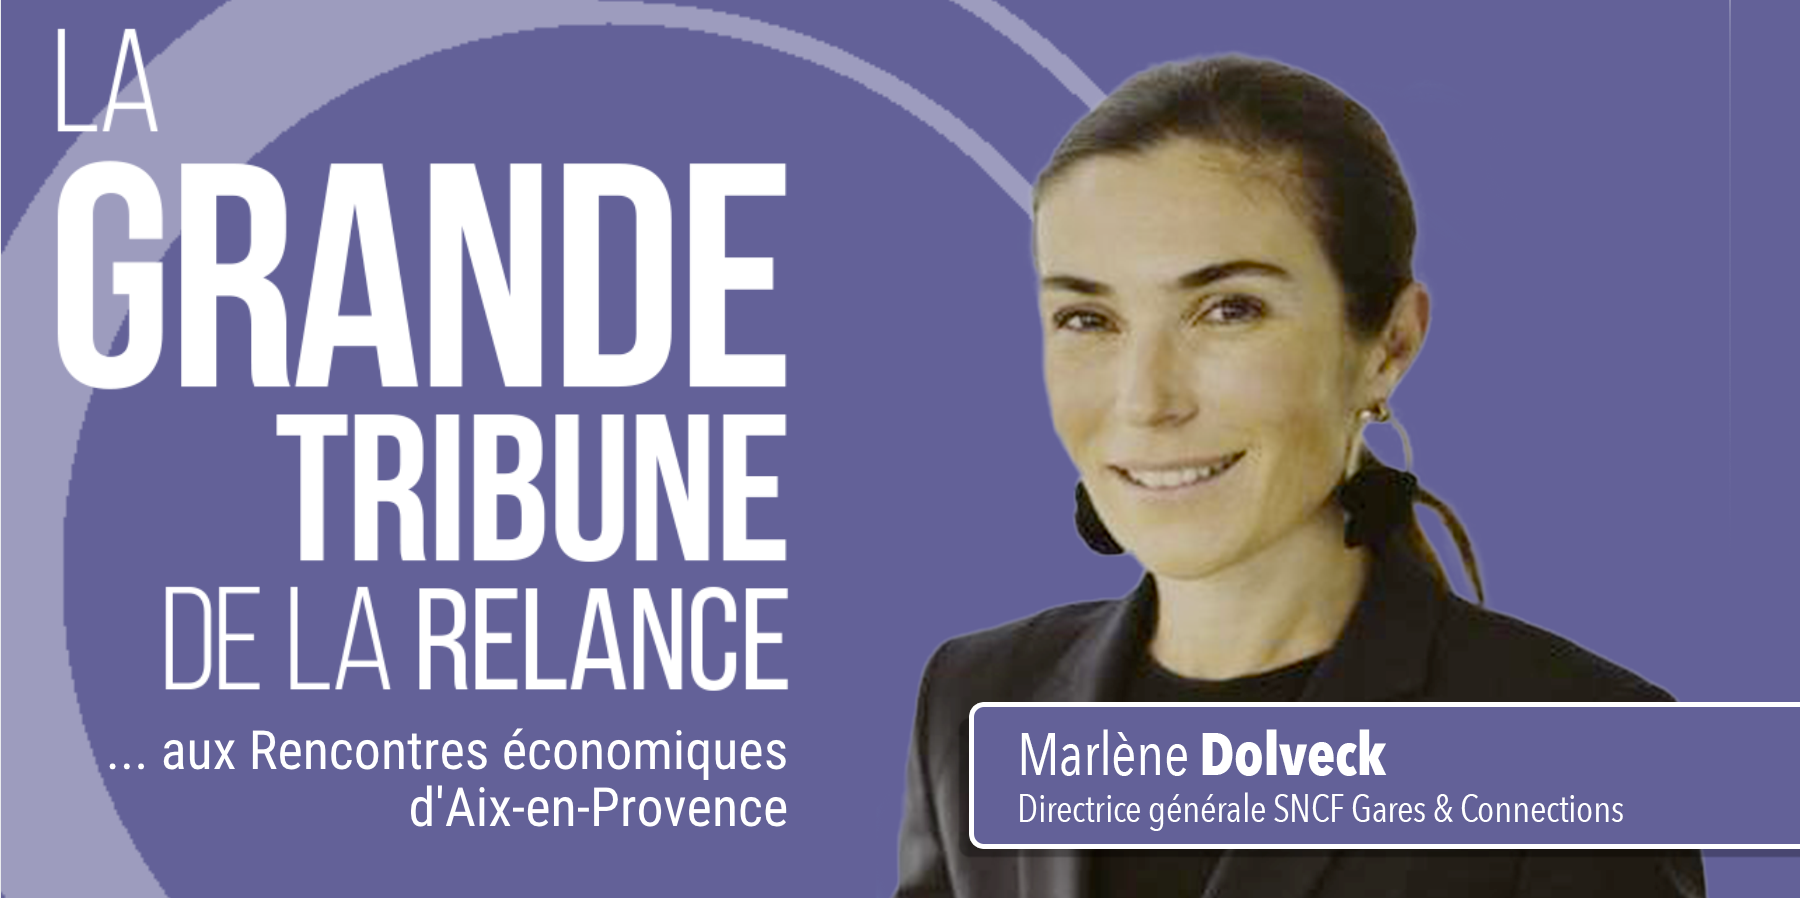 Marlène Dolveck, SNCF Gares & Connexions : 